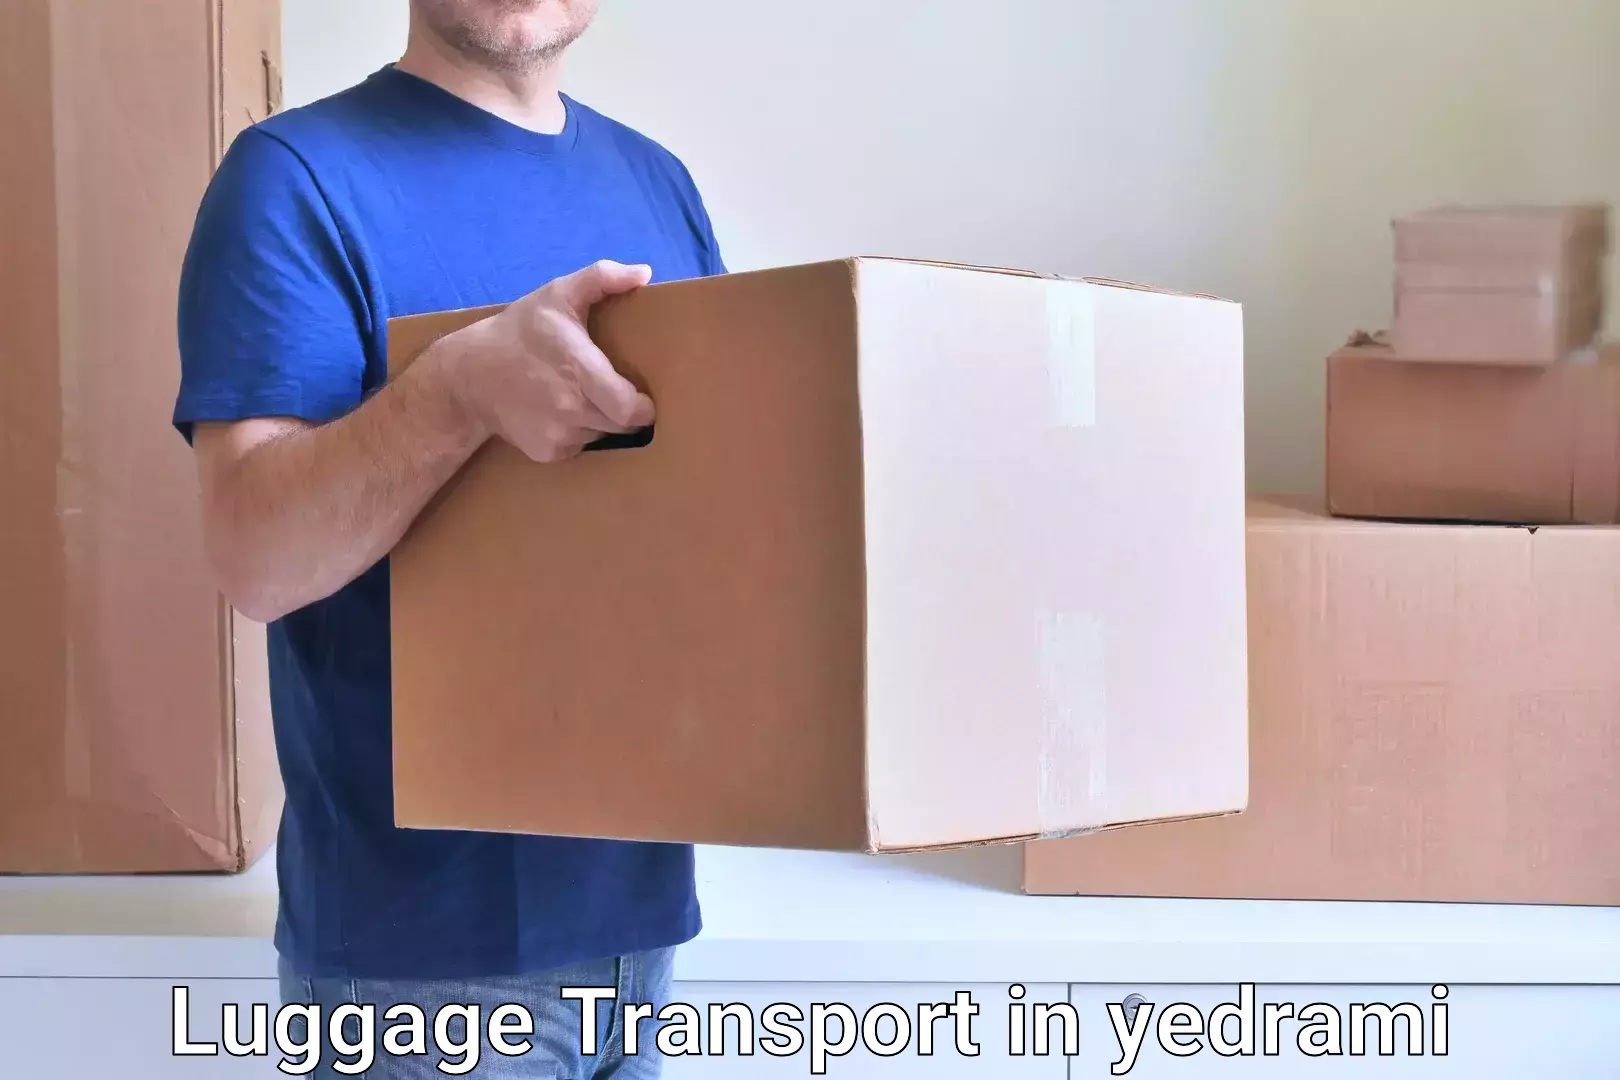 Baggage transport professionals in yedrami